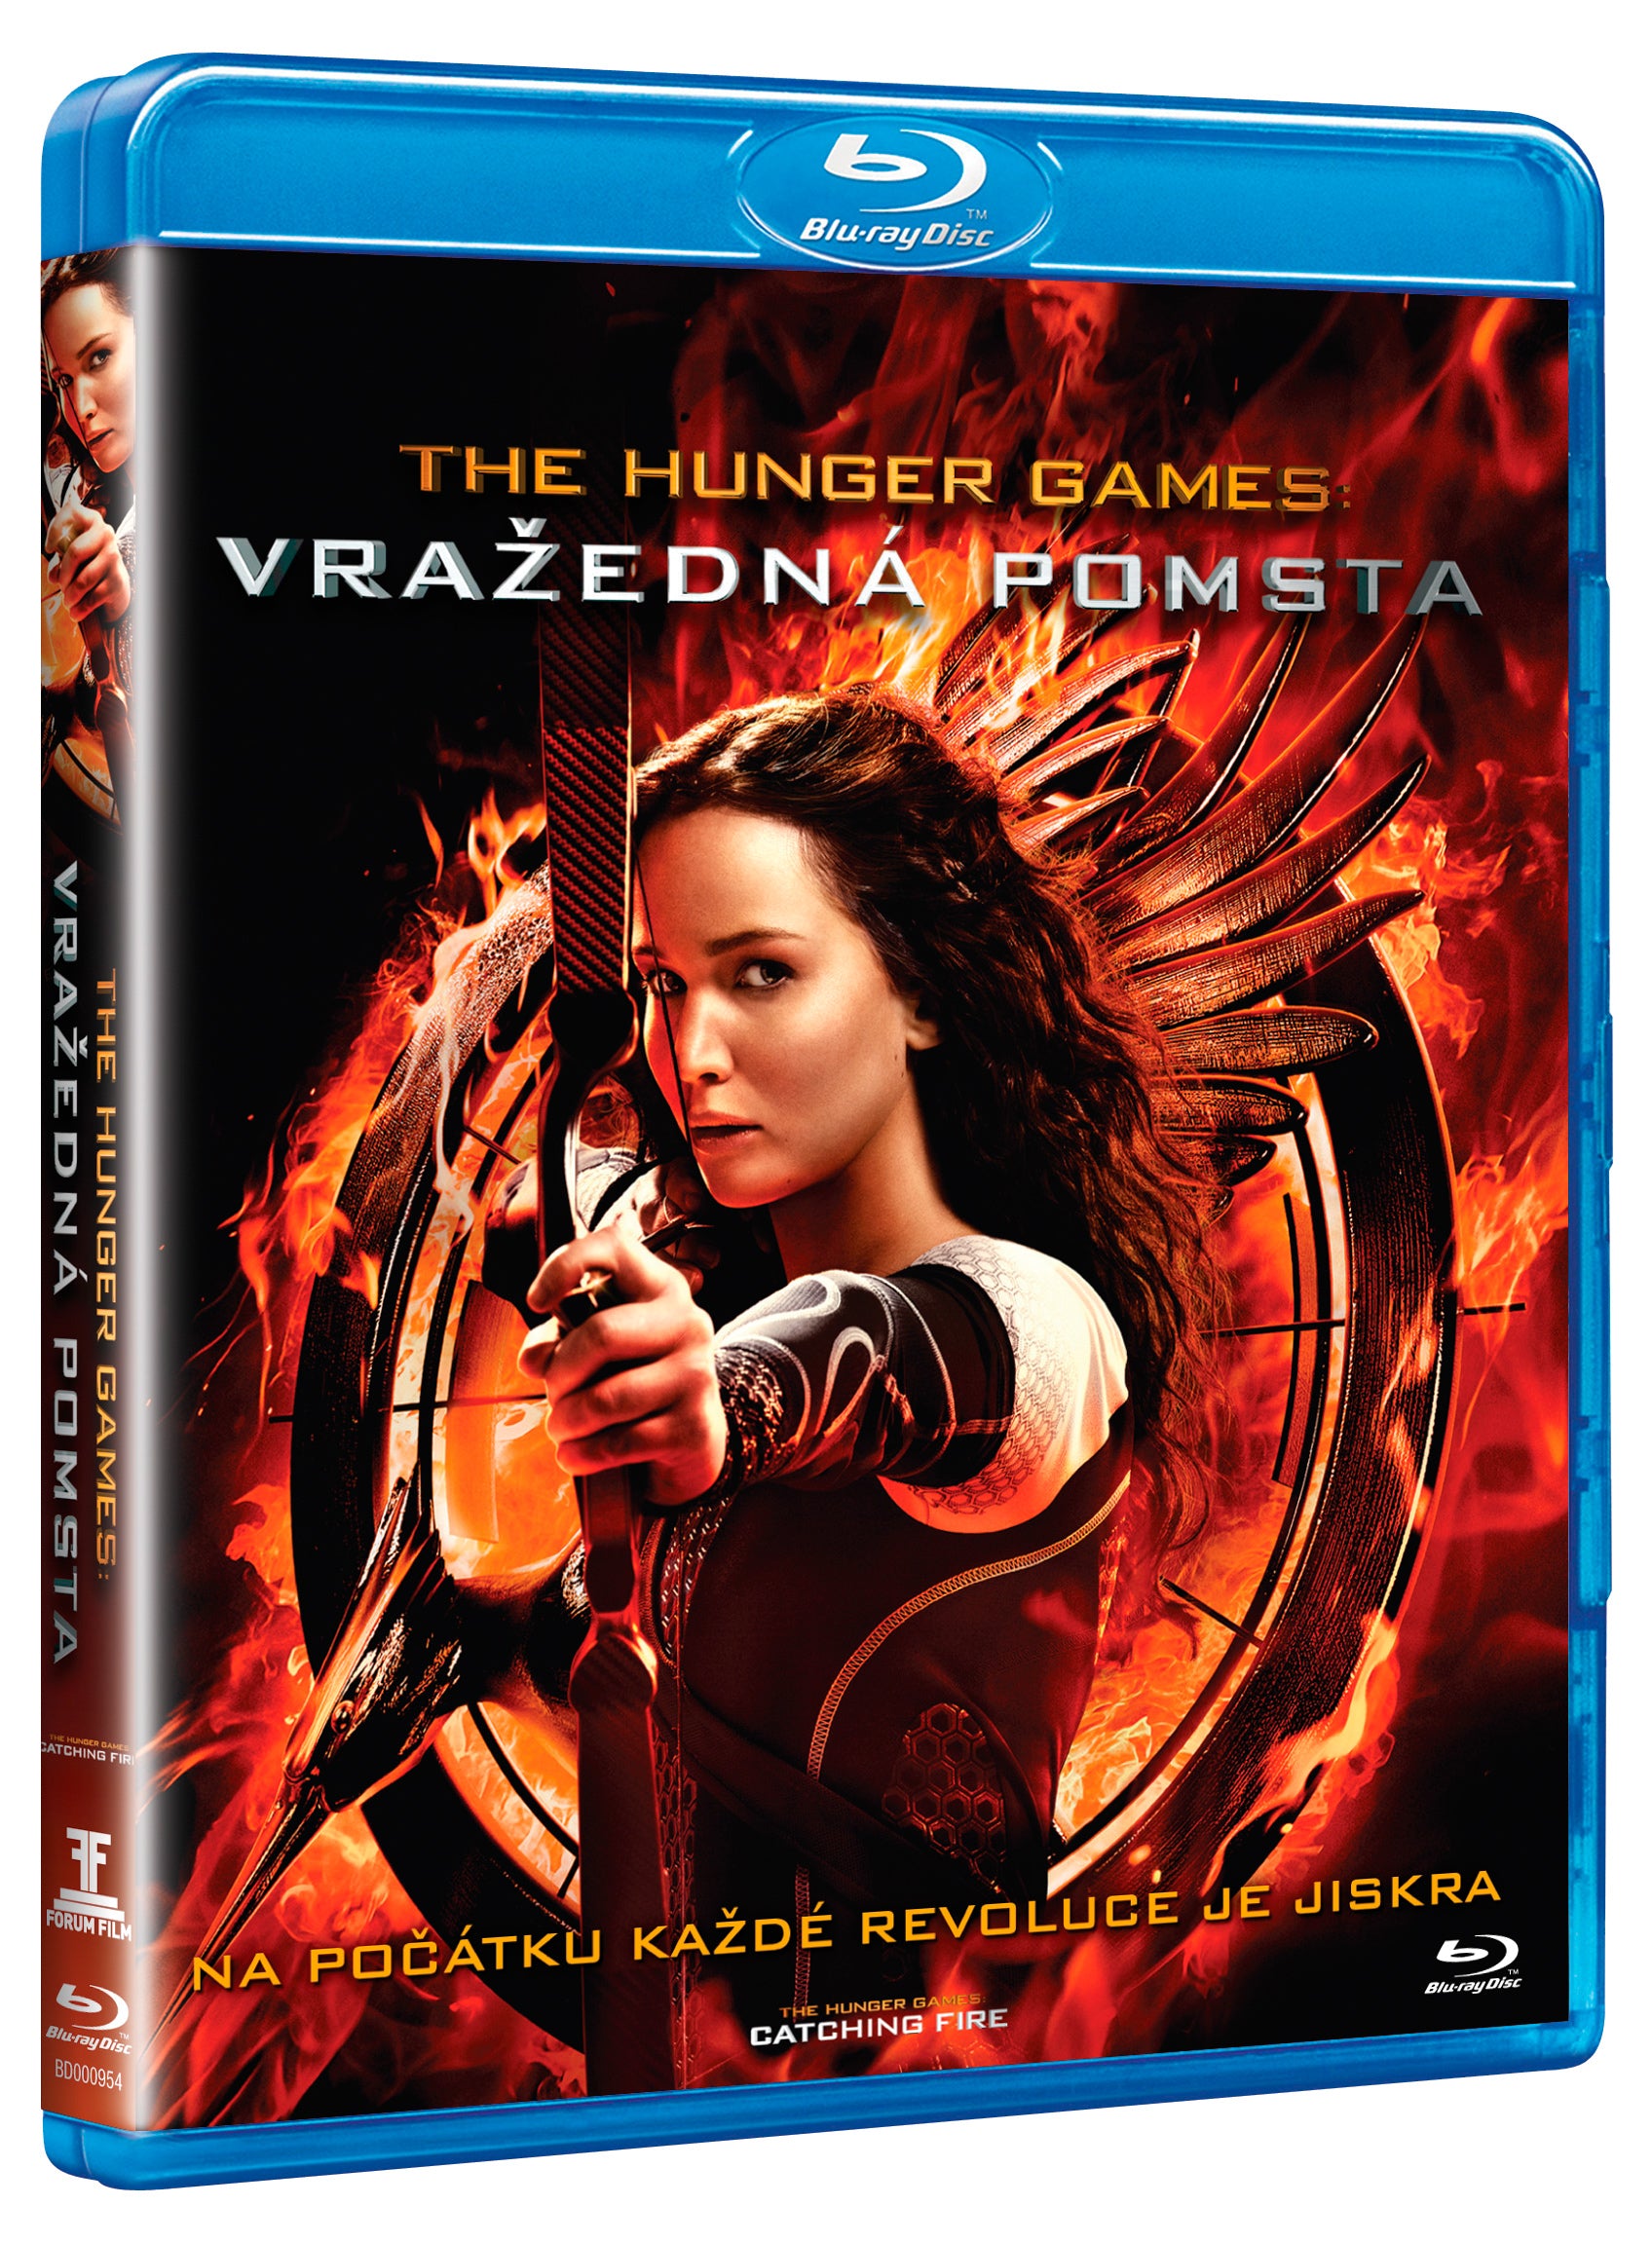 Hunger Games : Vrazedna Pomsta BD / The Hunger Games: Catching Fire - Czech version